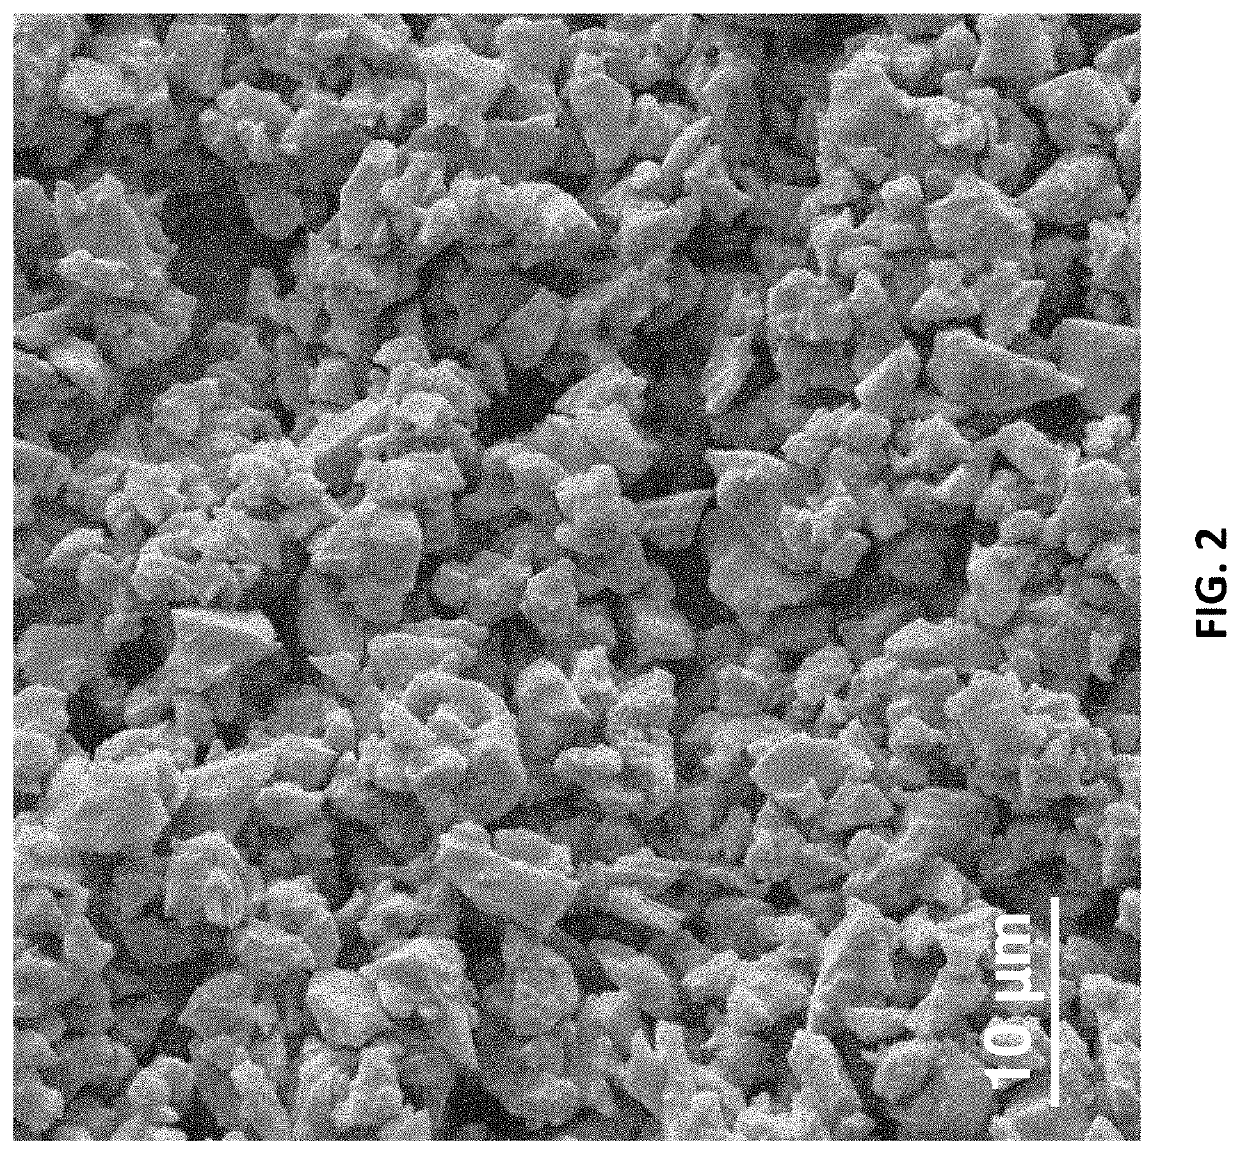 Porous Epoxy Nanocomposite Monoliths